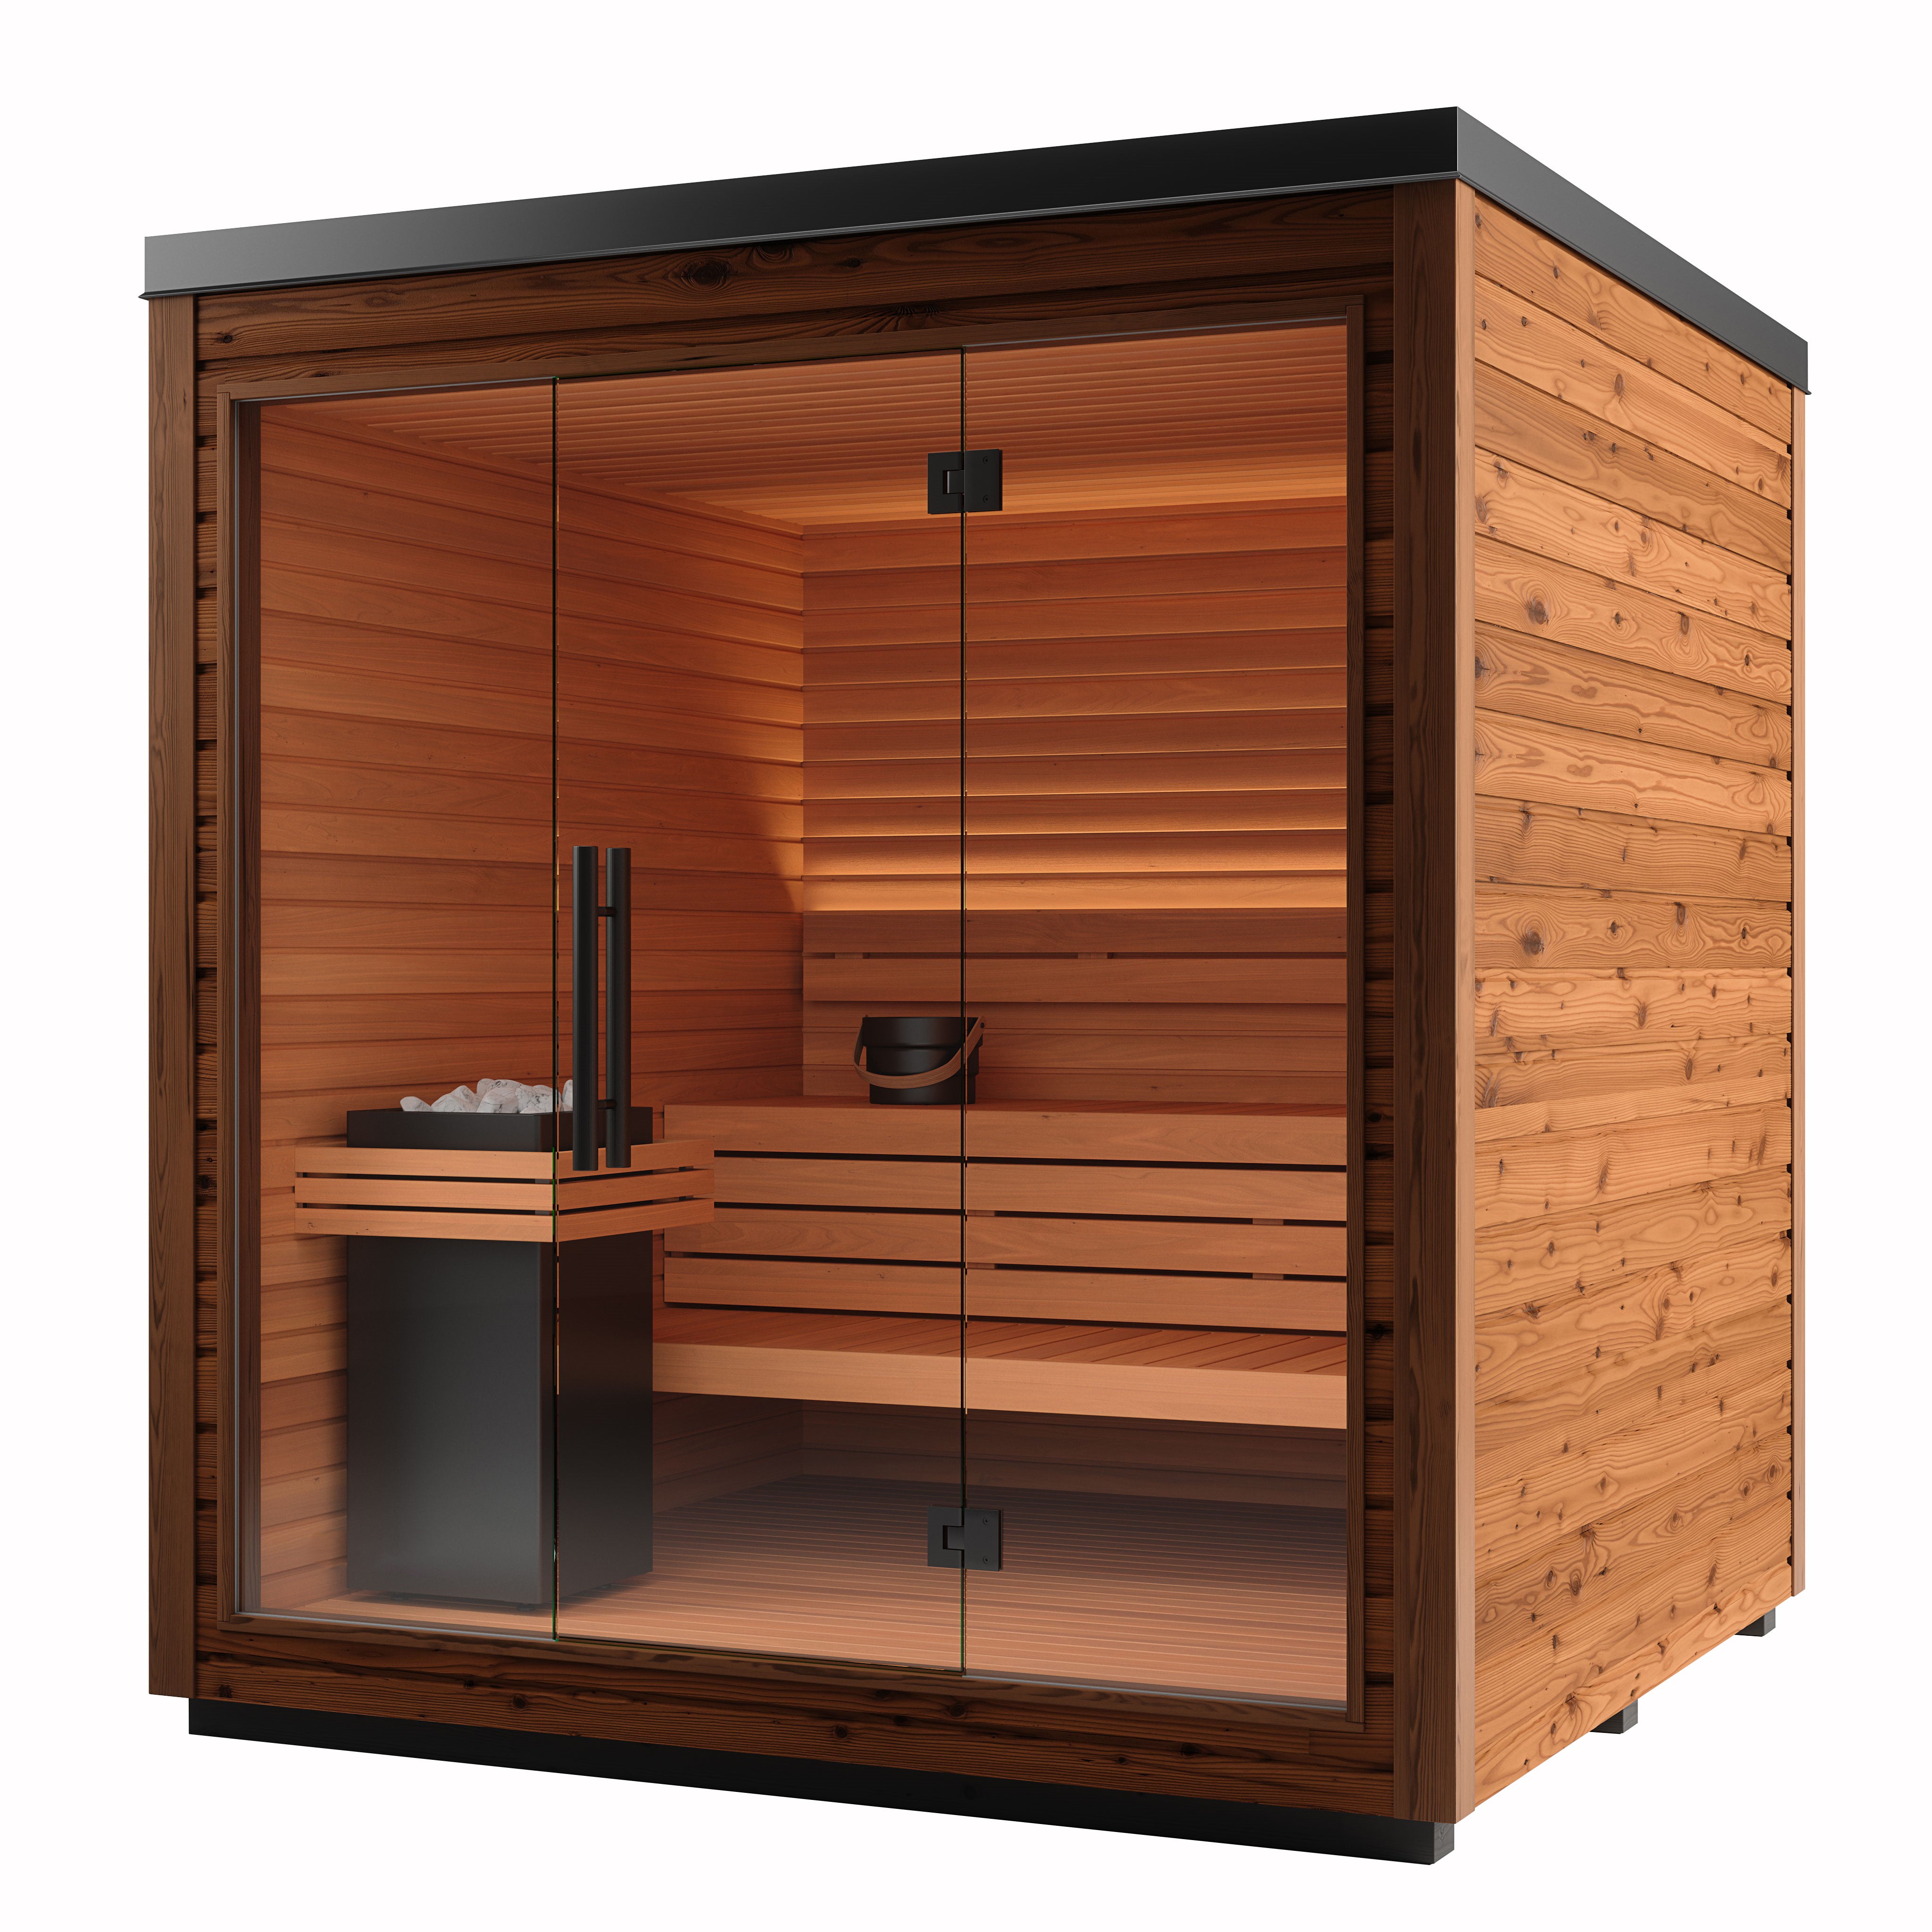 Transform Your Home Spa Experience: Indoor Saunas | SplashBlaze